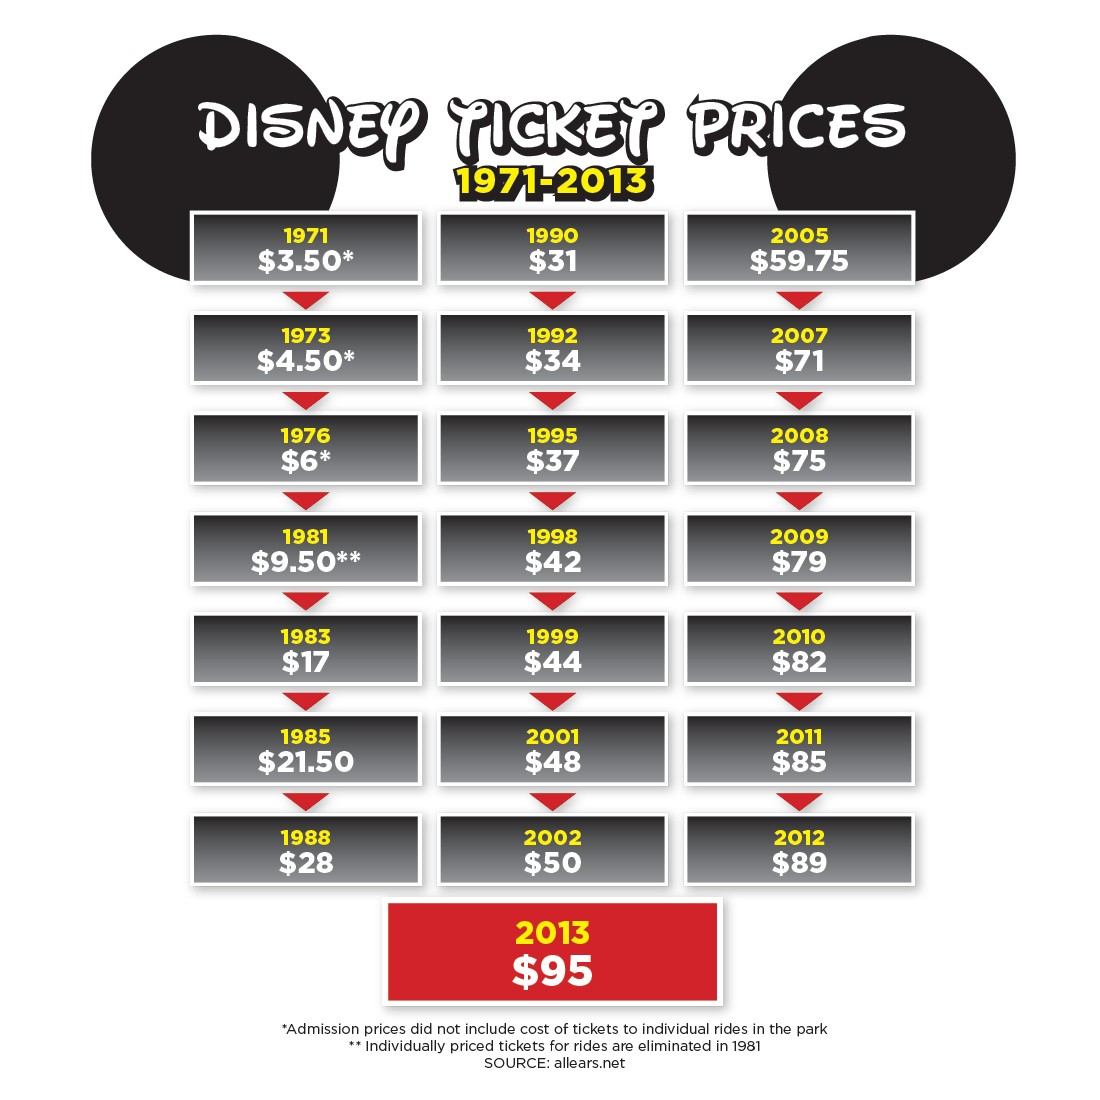 Disney World In Orlando Florida Ticket Prices